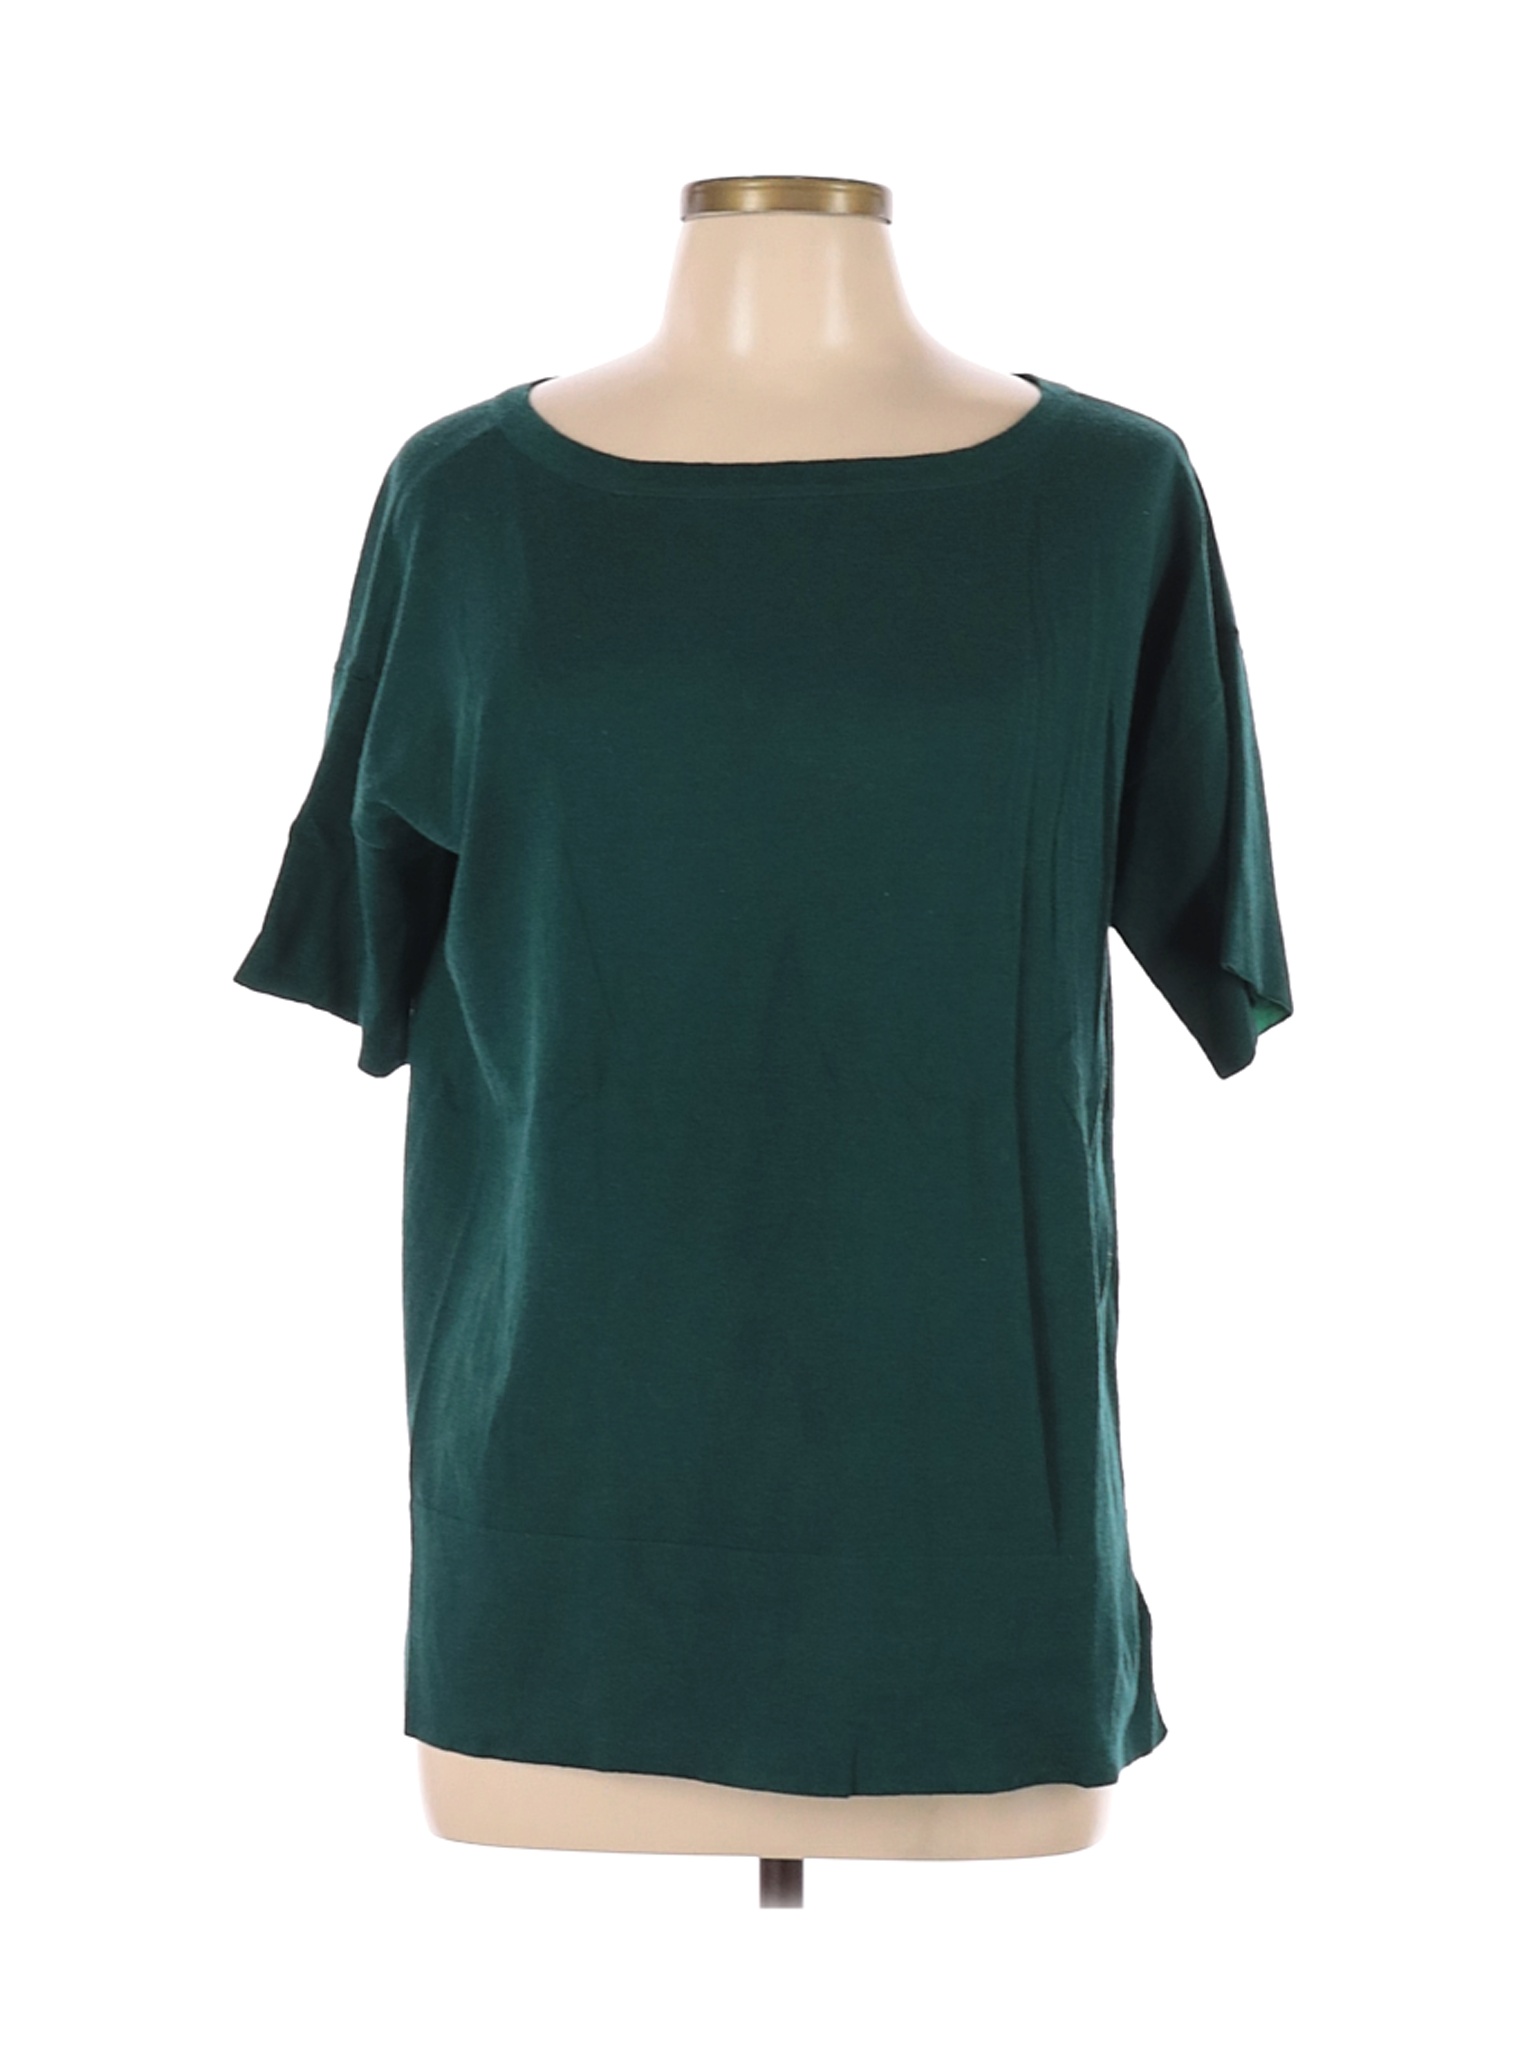 The Limited Women Green Short Sleeve Top M | eBay